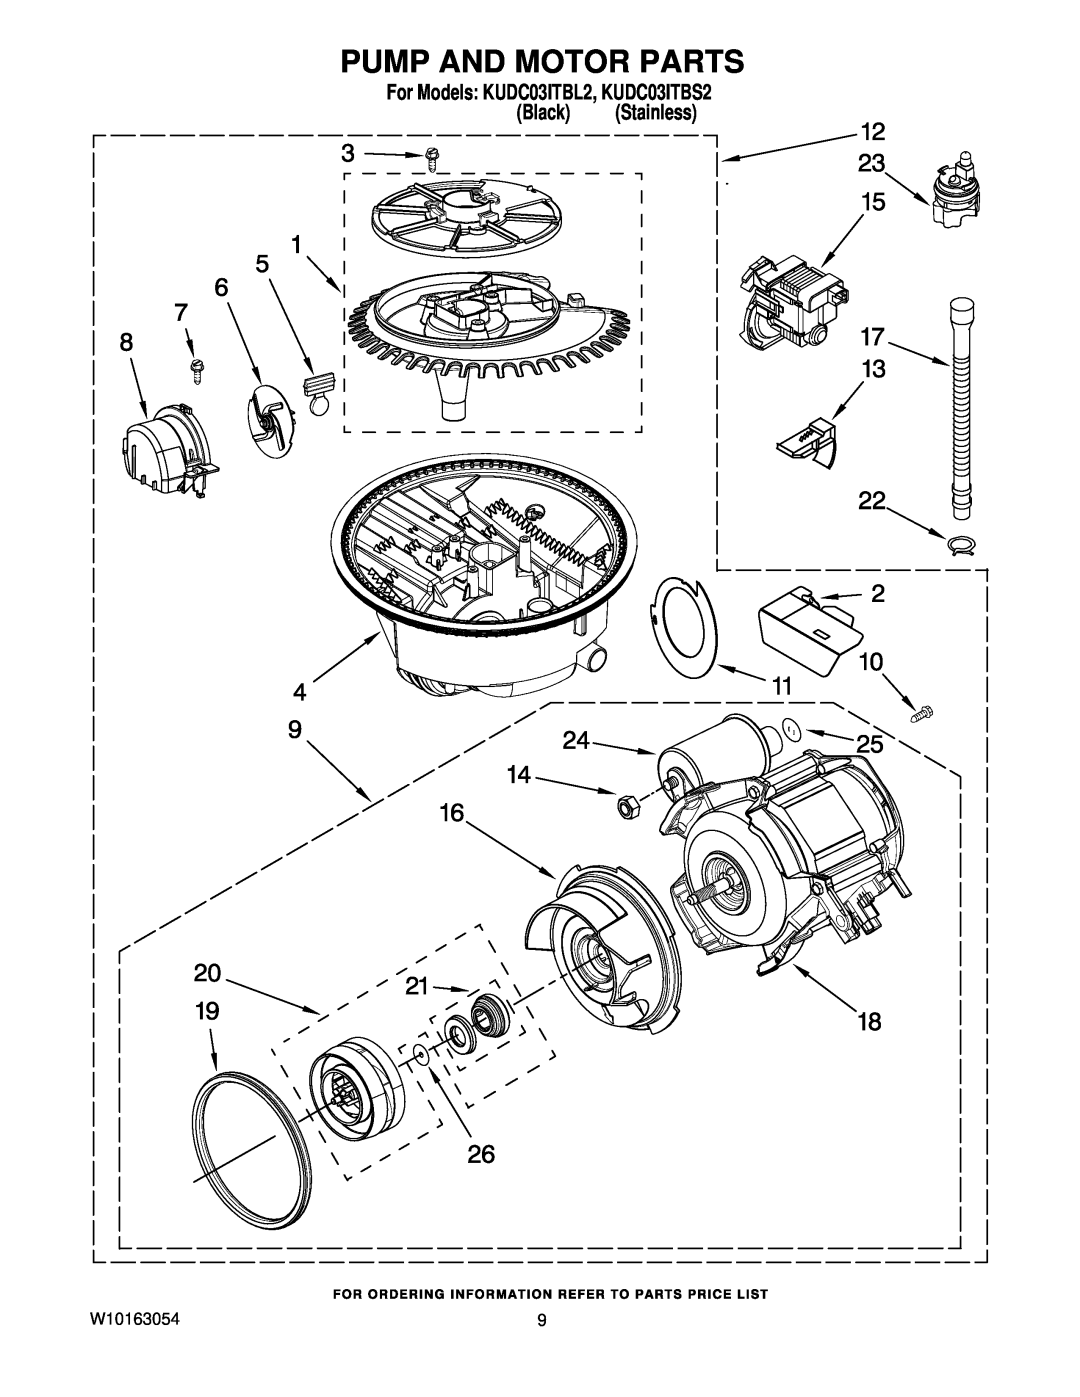 KitchenAid manual Pump And Motor Parts, For Models KUDC03ITBL2, KUDC03ITBS2 Black Stainless 